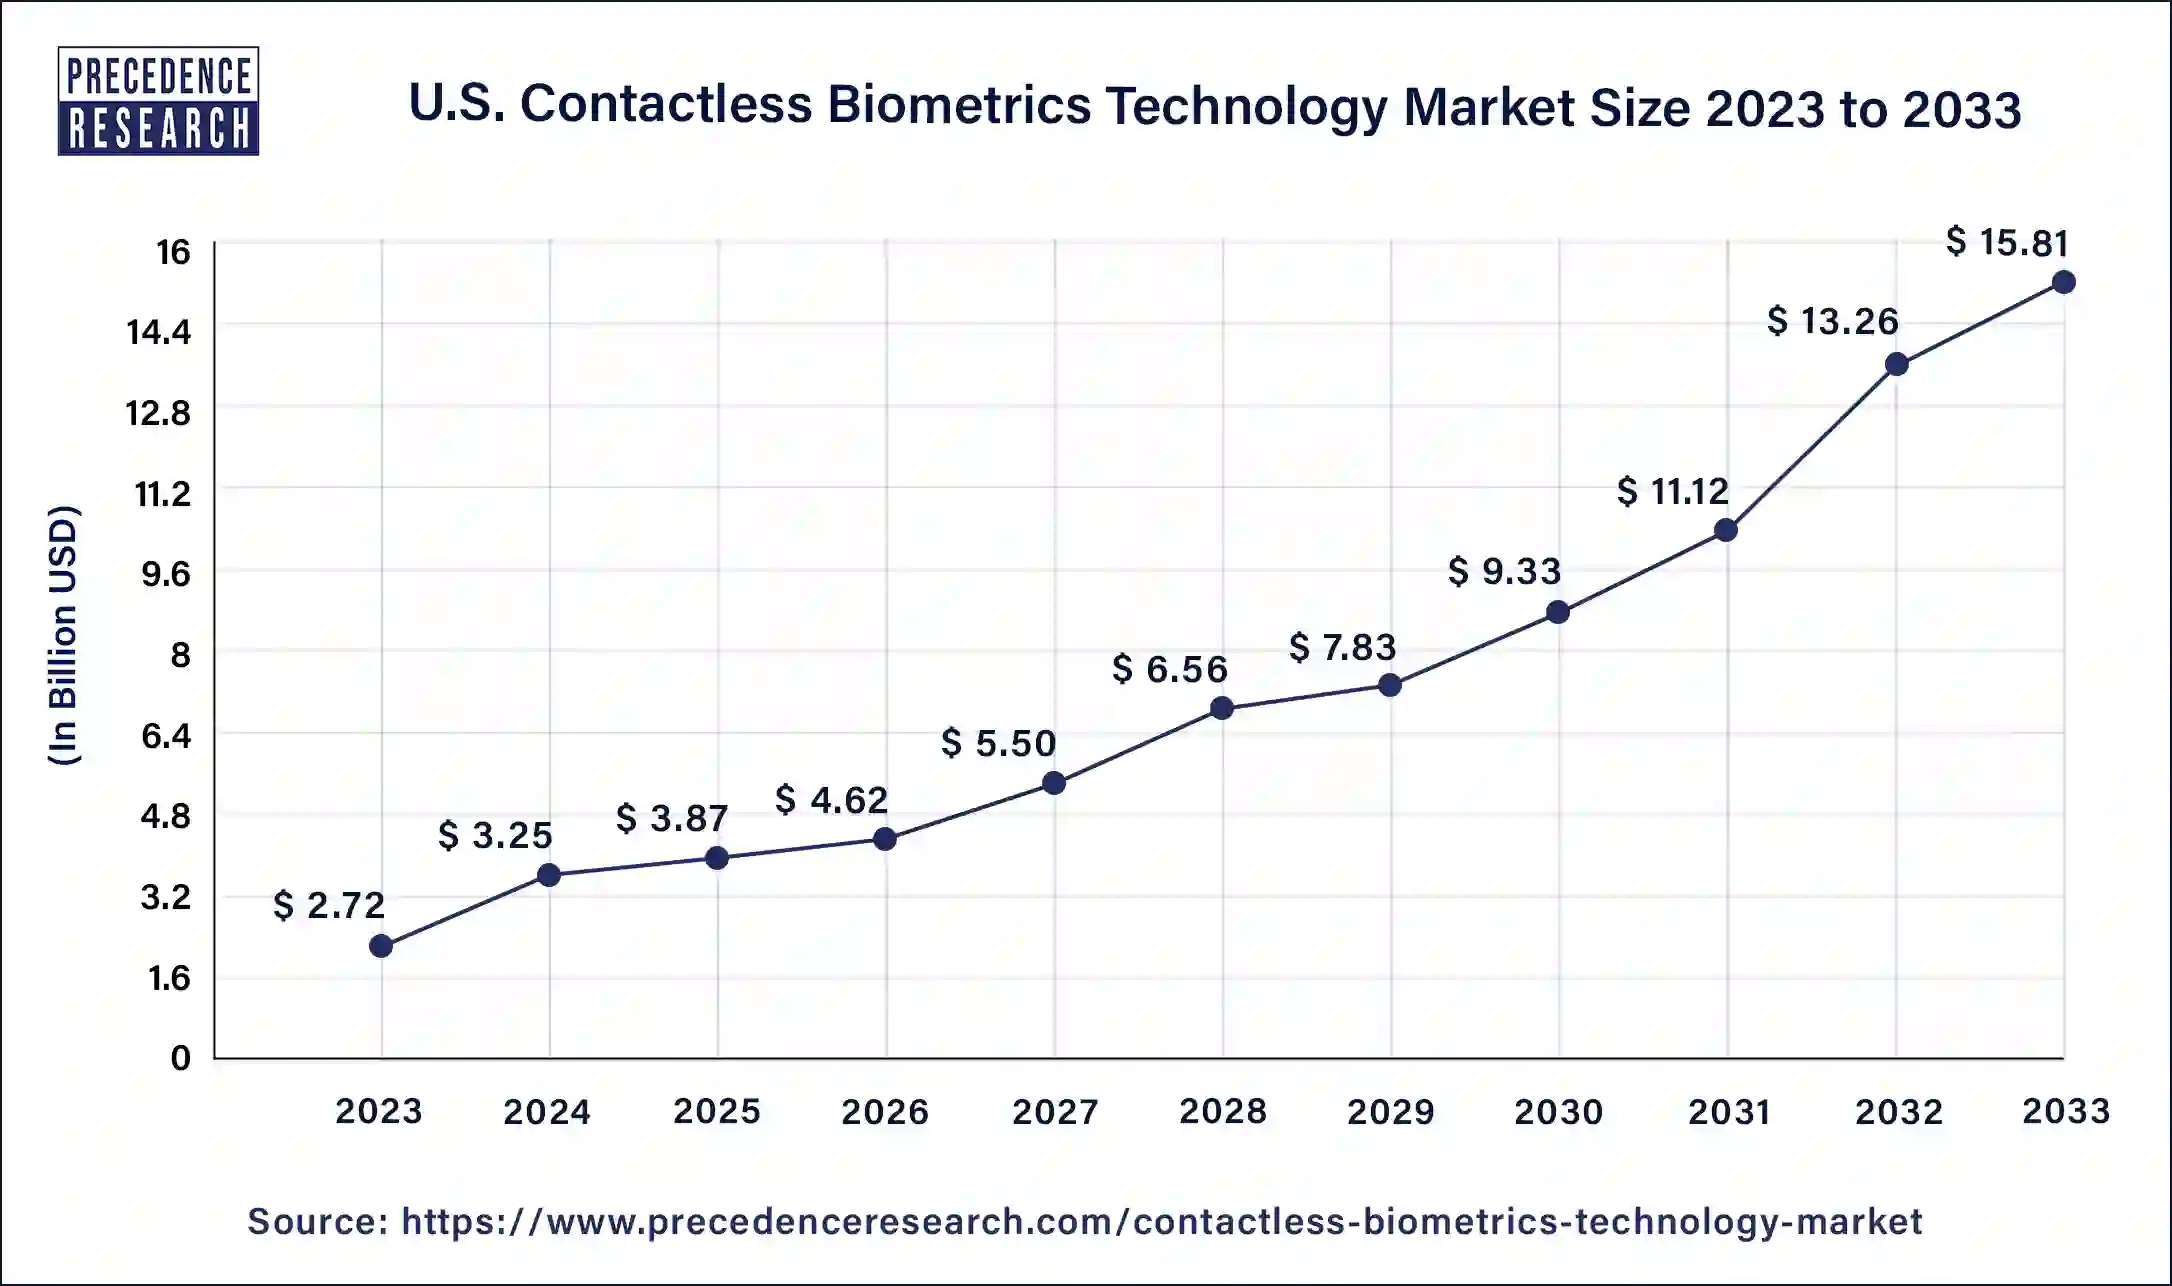 U.S. Contactless Biometrics Technology Market Size 2024 to 2033